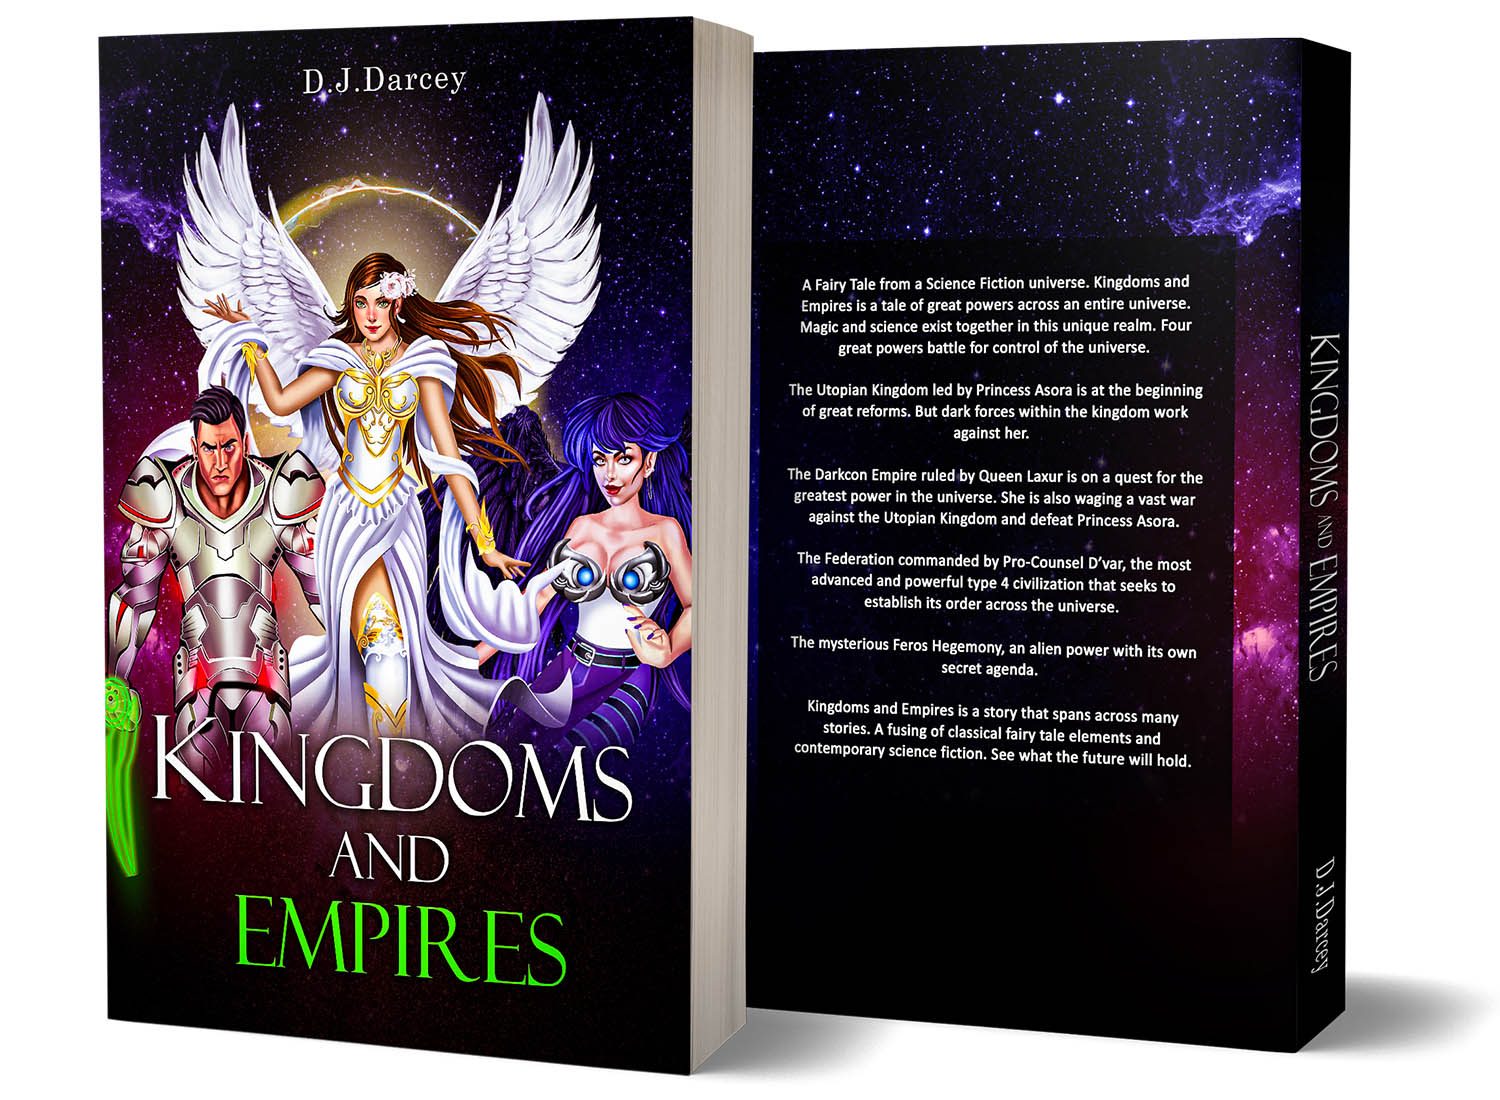 bookconsilio-portfolio-kingdomes-and-empires-paperback-bookcoverdesign-